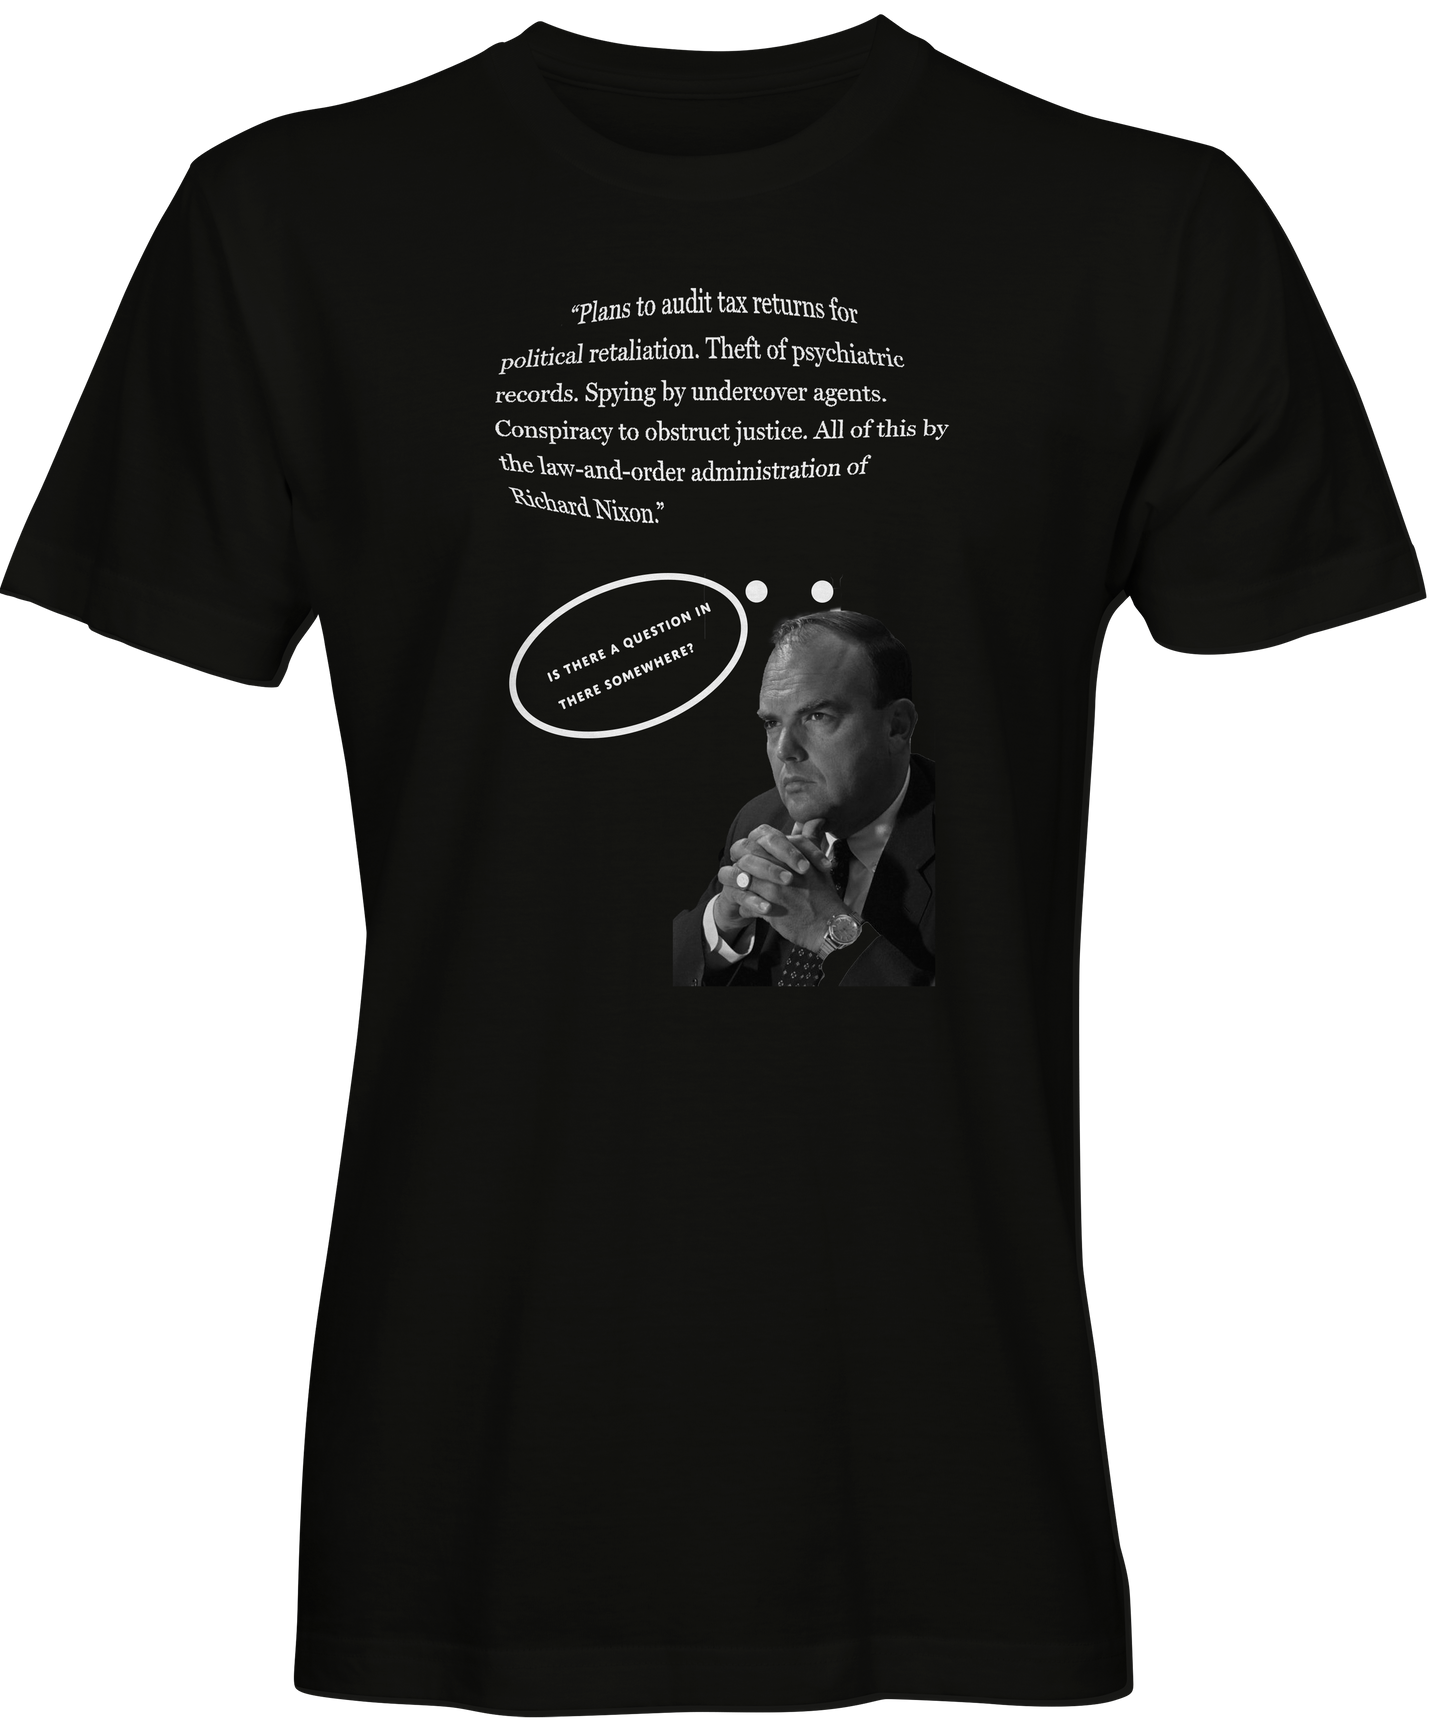 Richard Nixon Statement inspired T-shirt